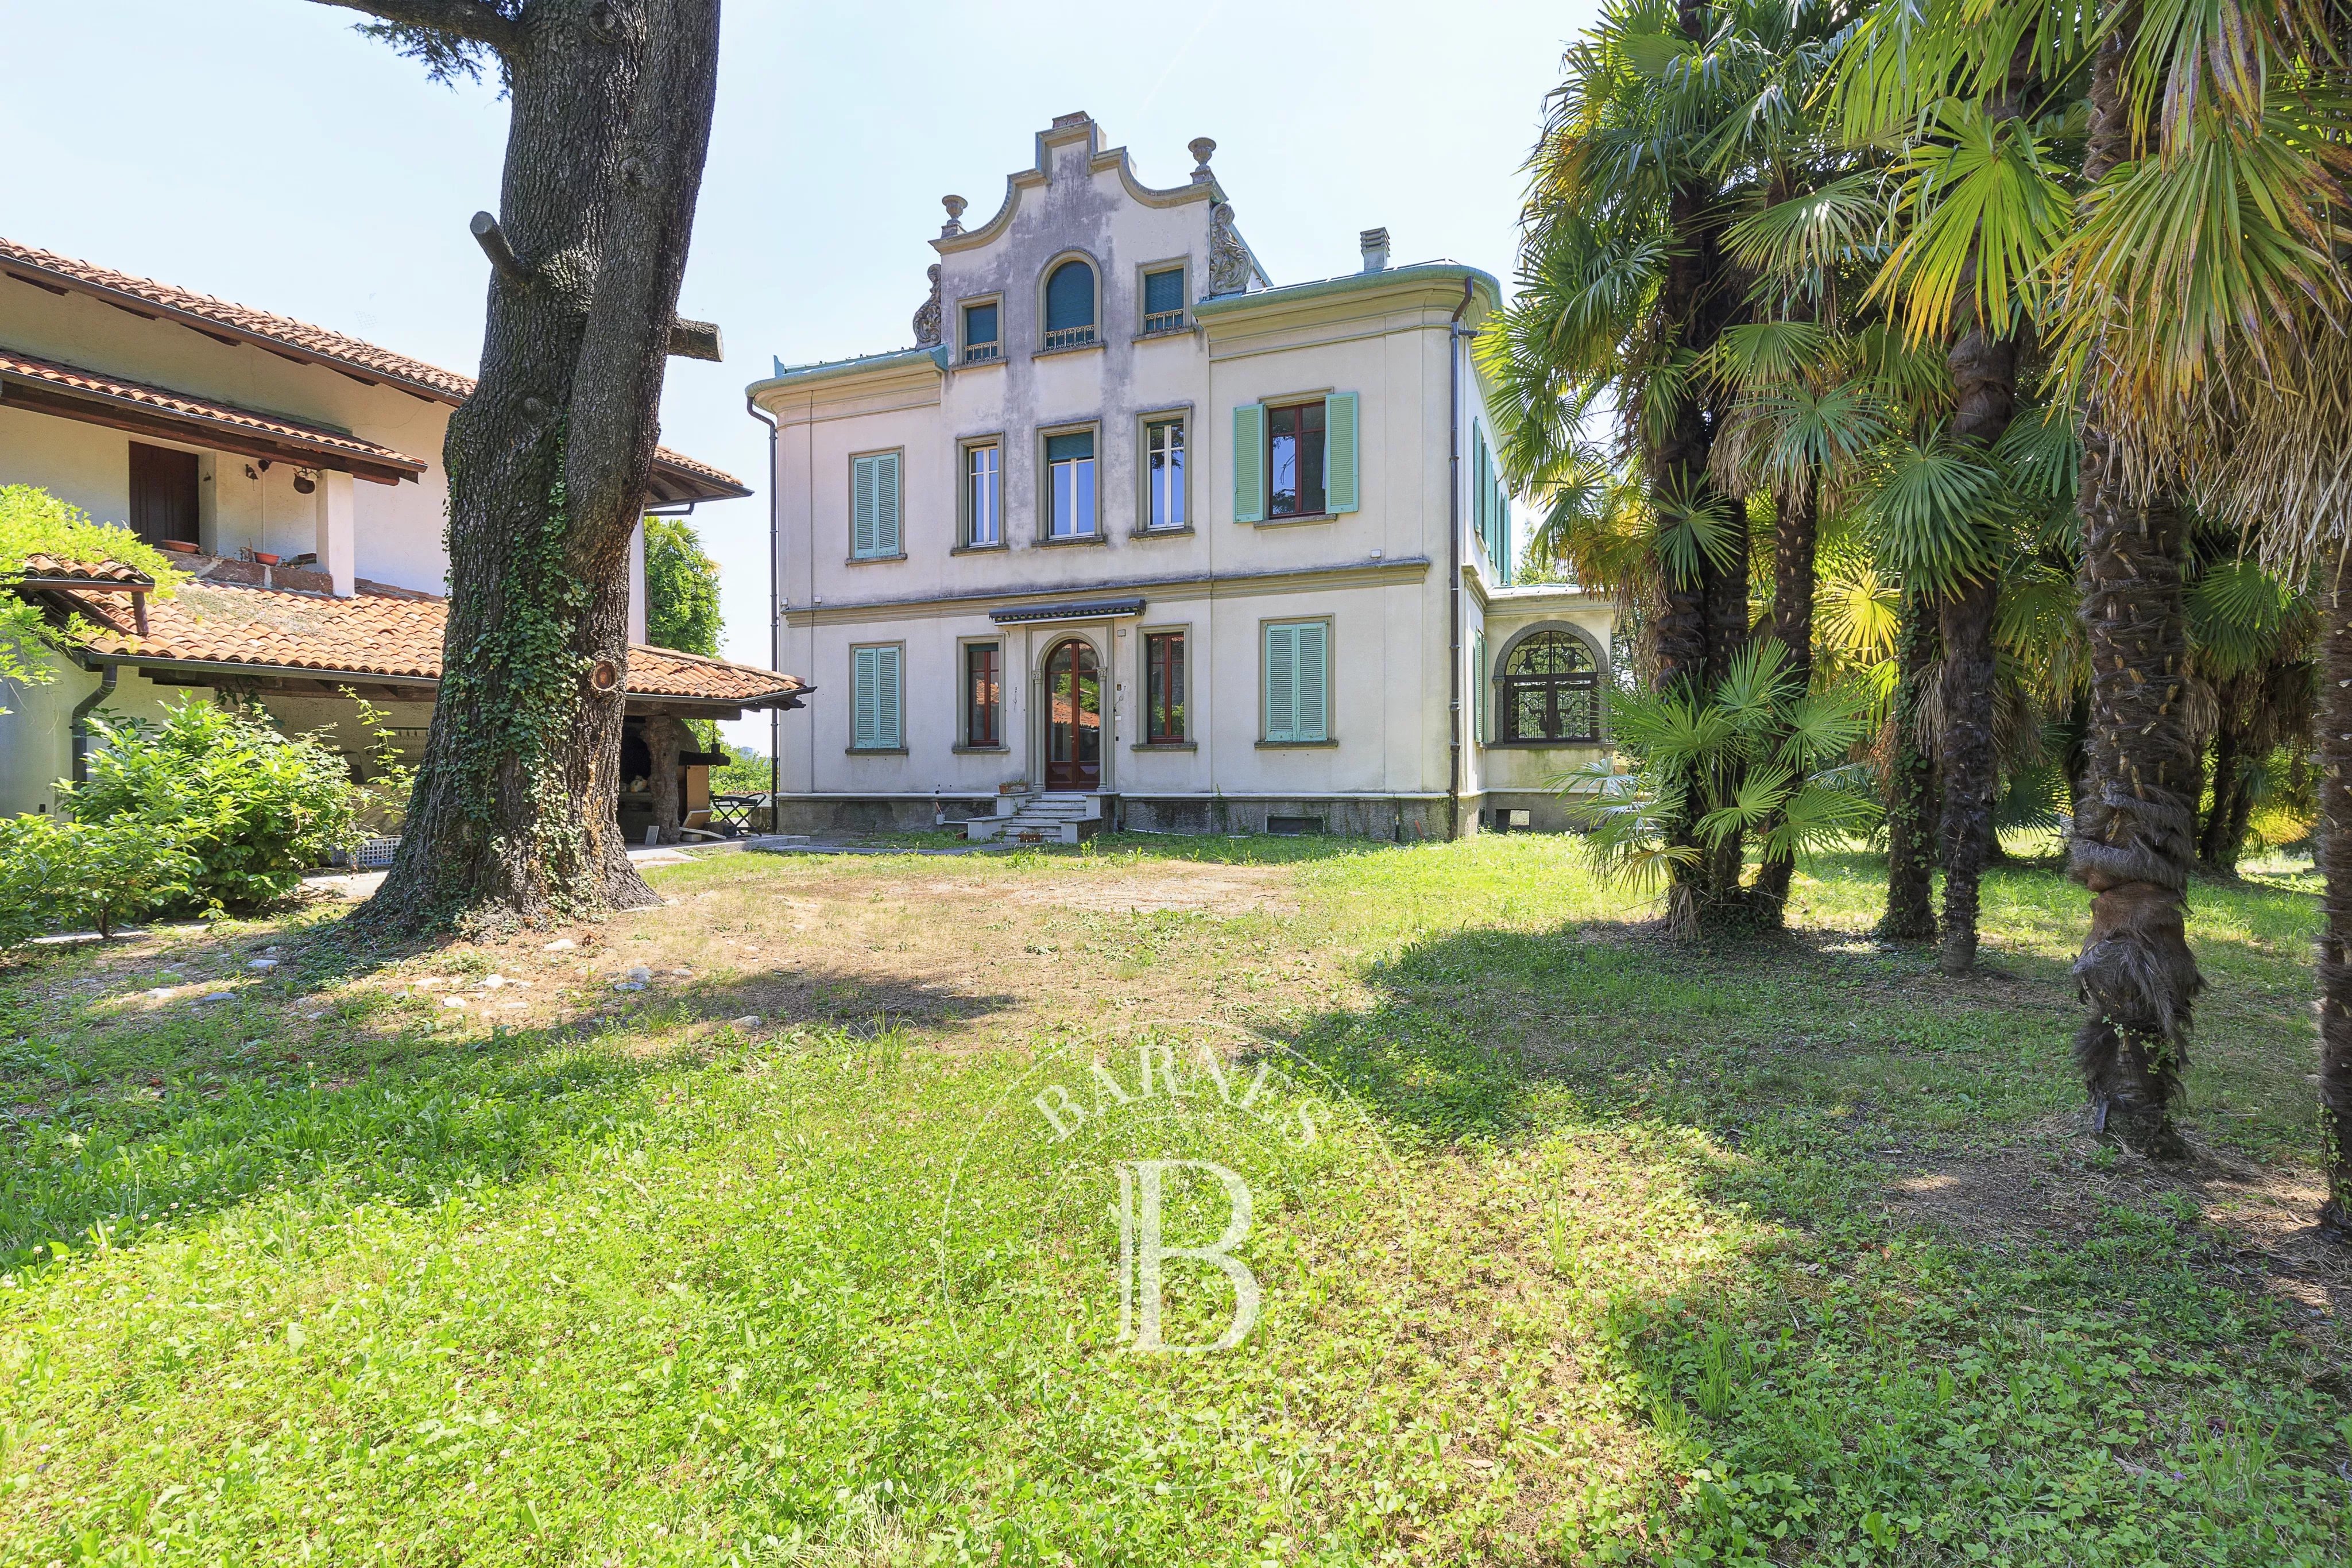 Villa historique à vendre Montano Lucino - picture 13 title=